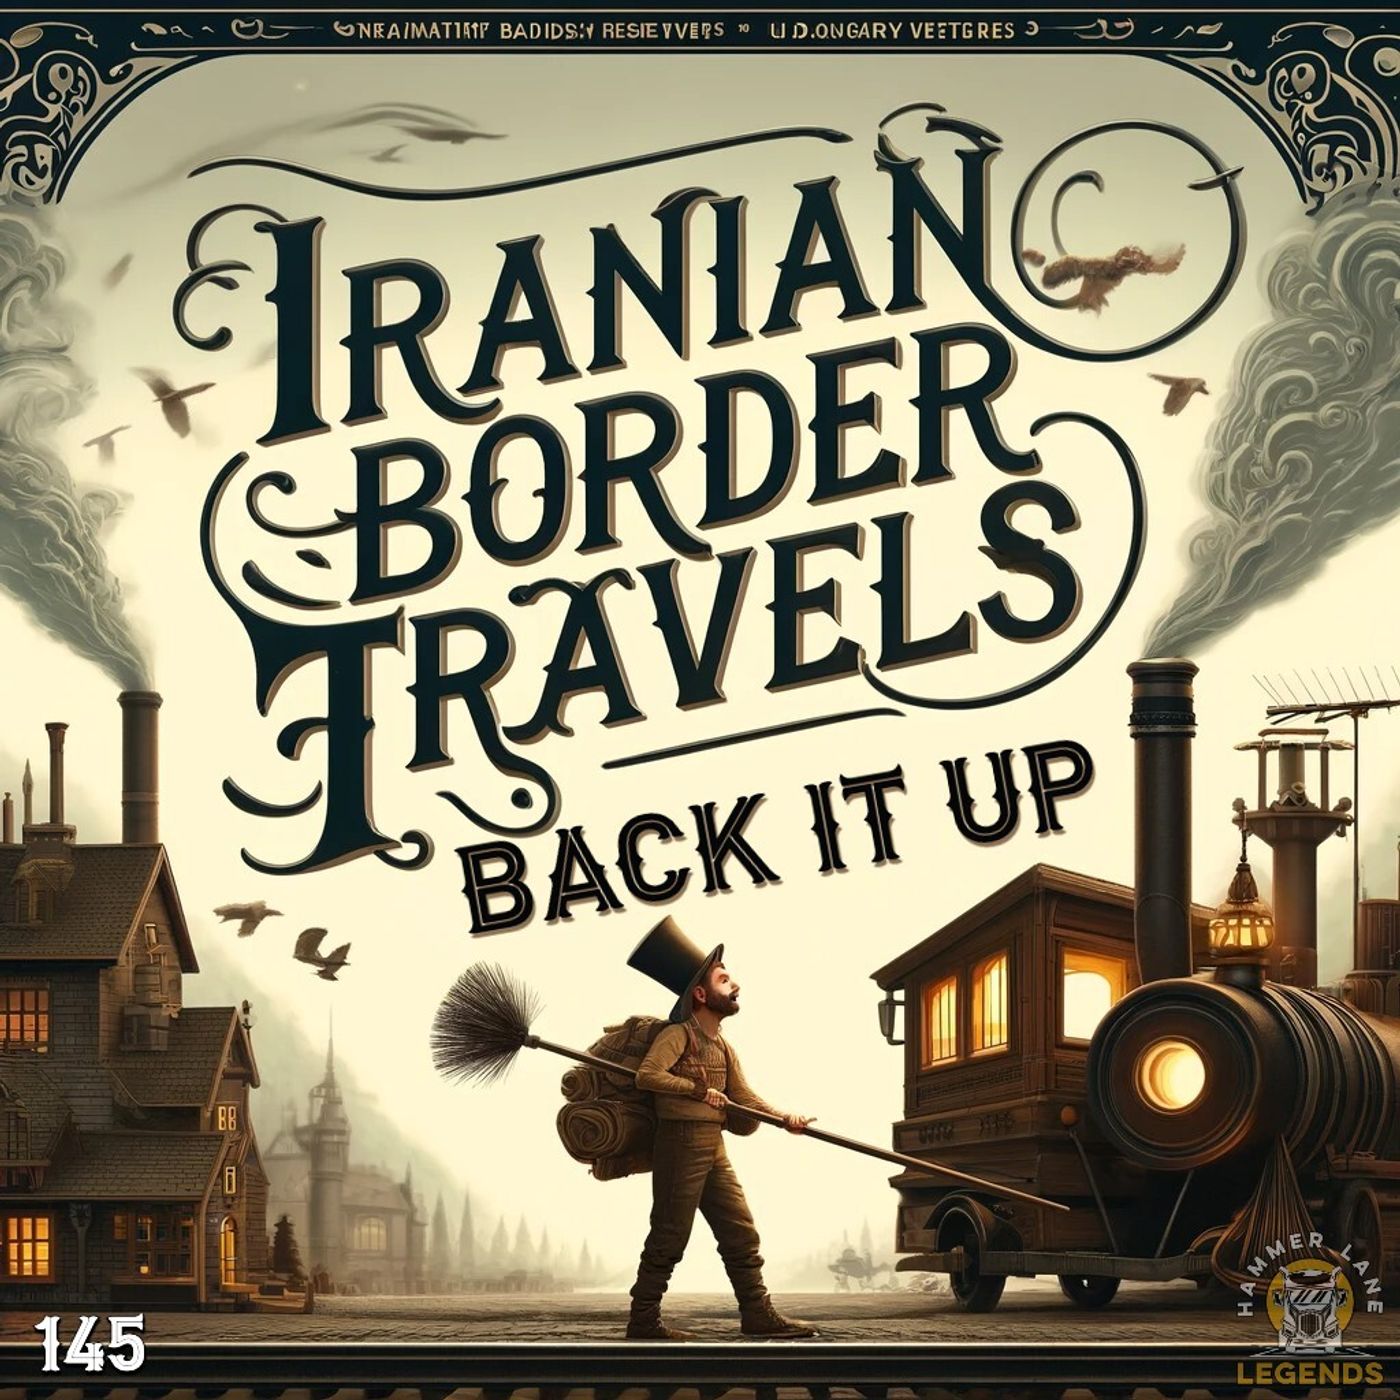 BACK IT UP | 145: Iranian Border Travels